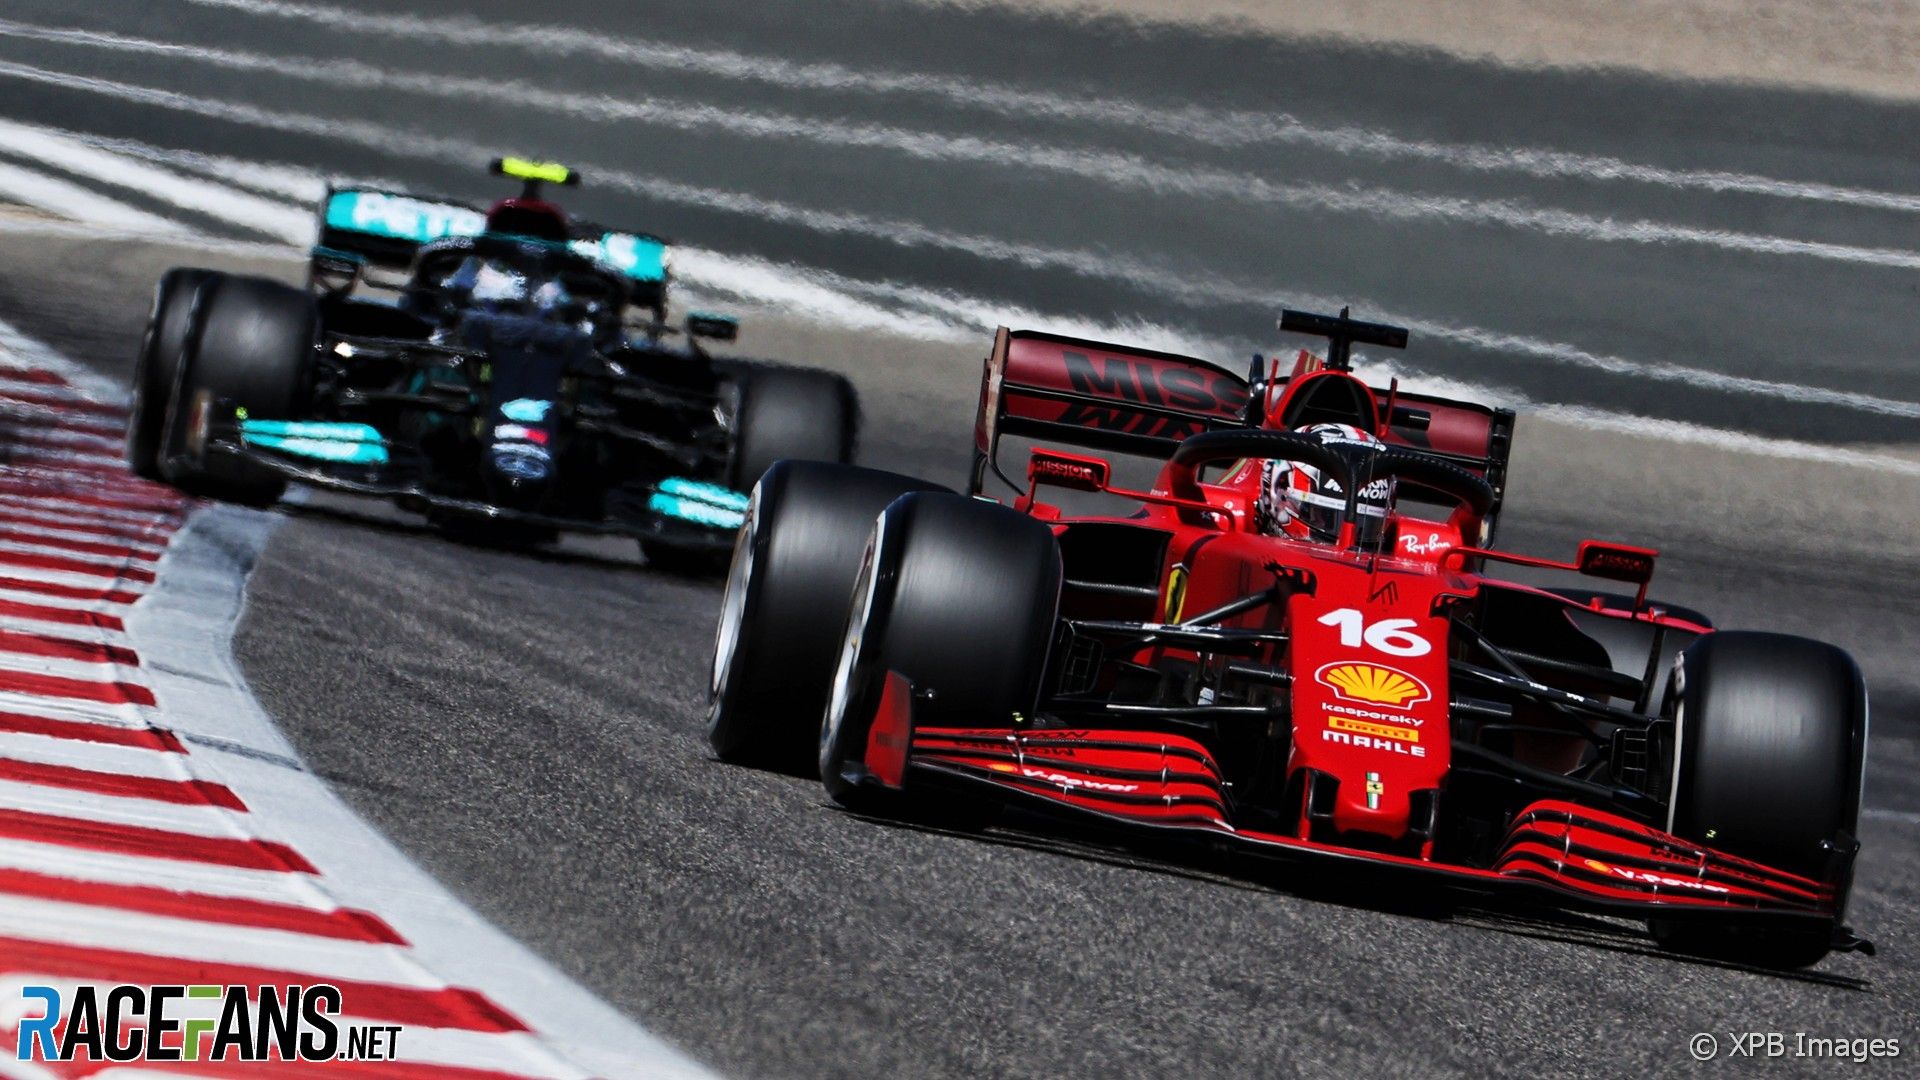 Ferrari: The engine has made a large step forward · RaceFans